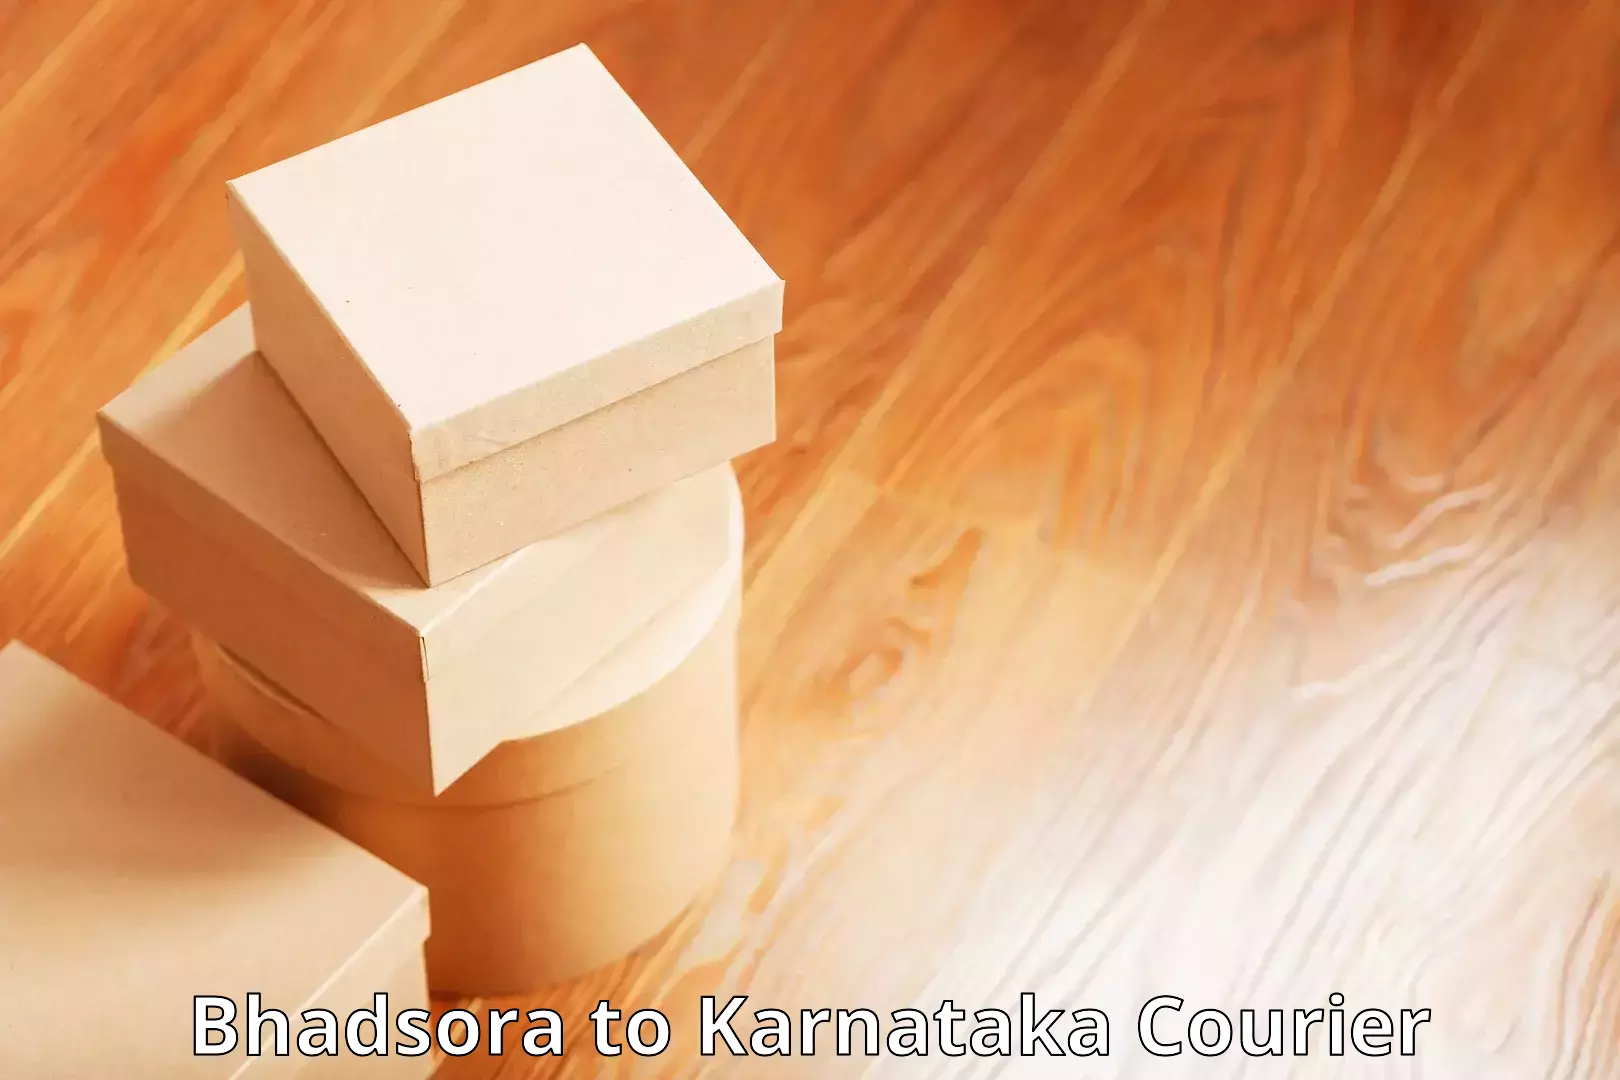 Express delivery capabilities Bhadsora to Karnataka